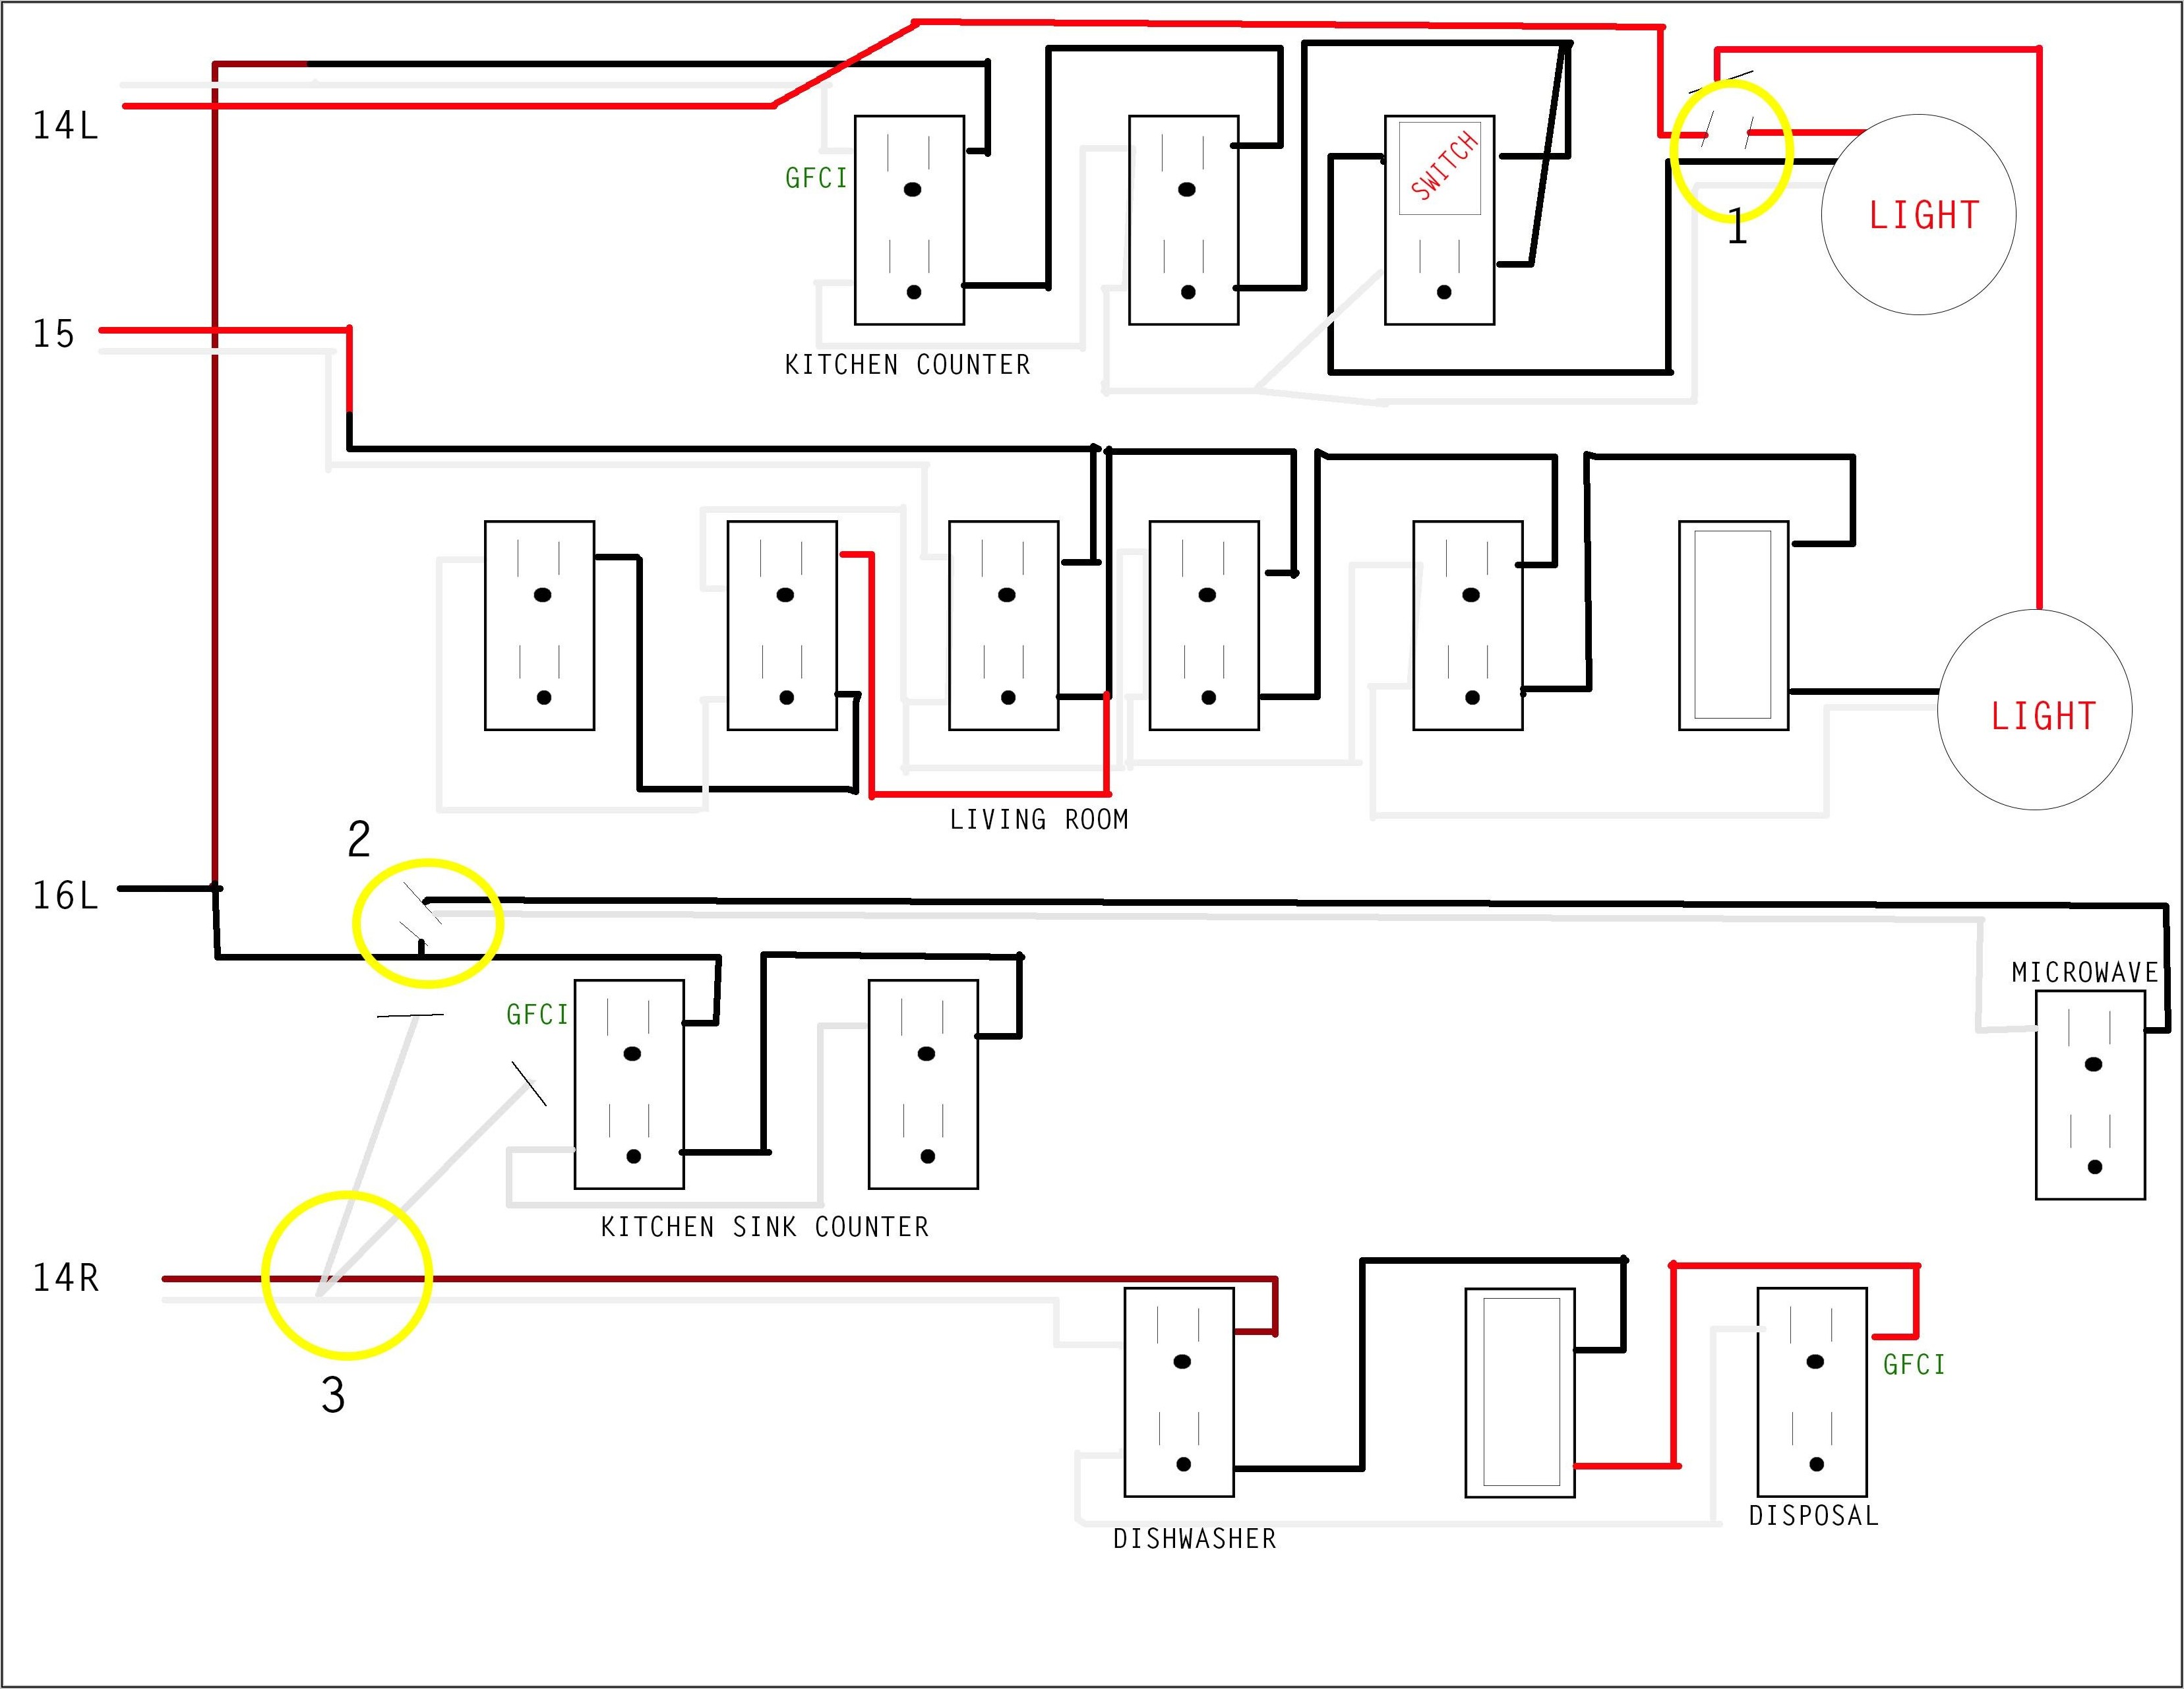 electrical house wiring diagram pdf